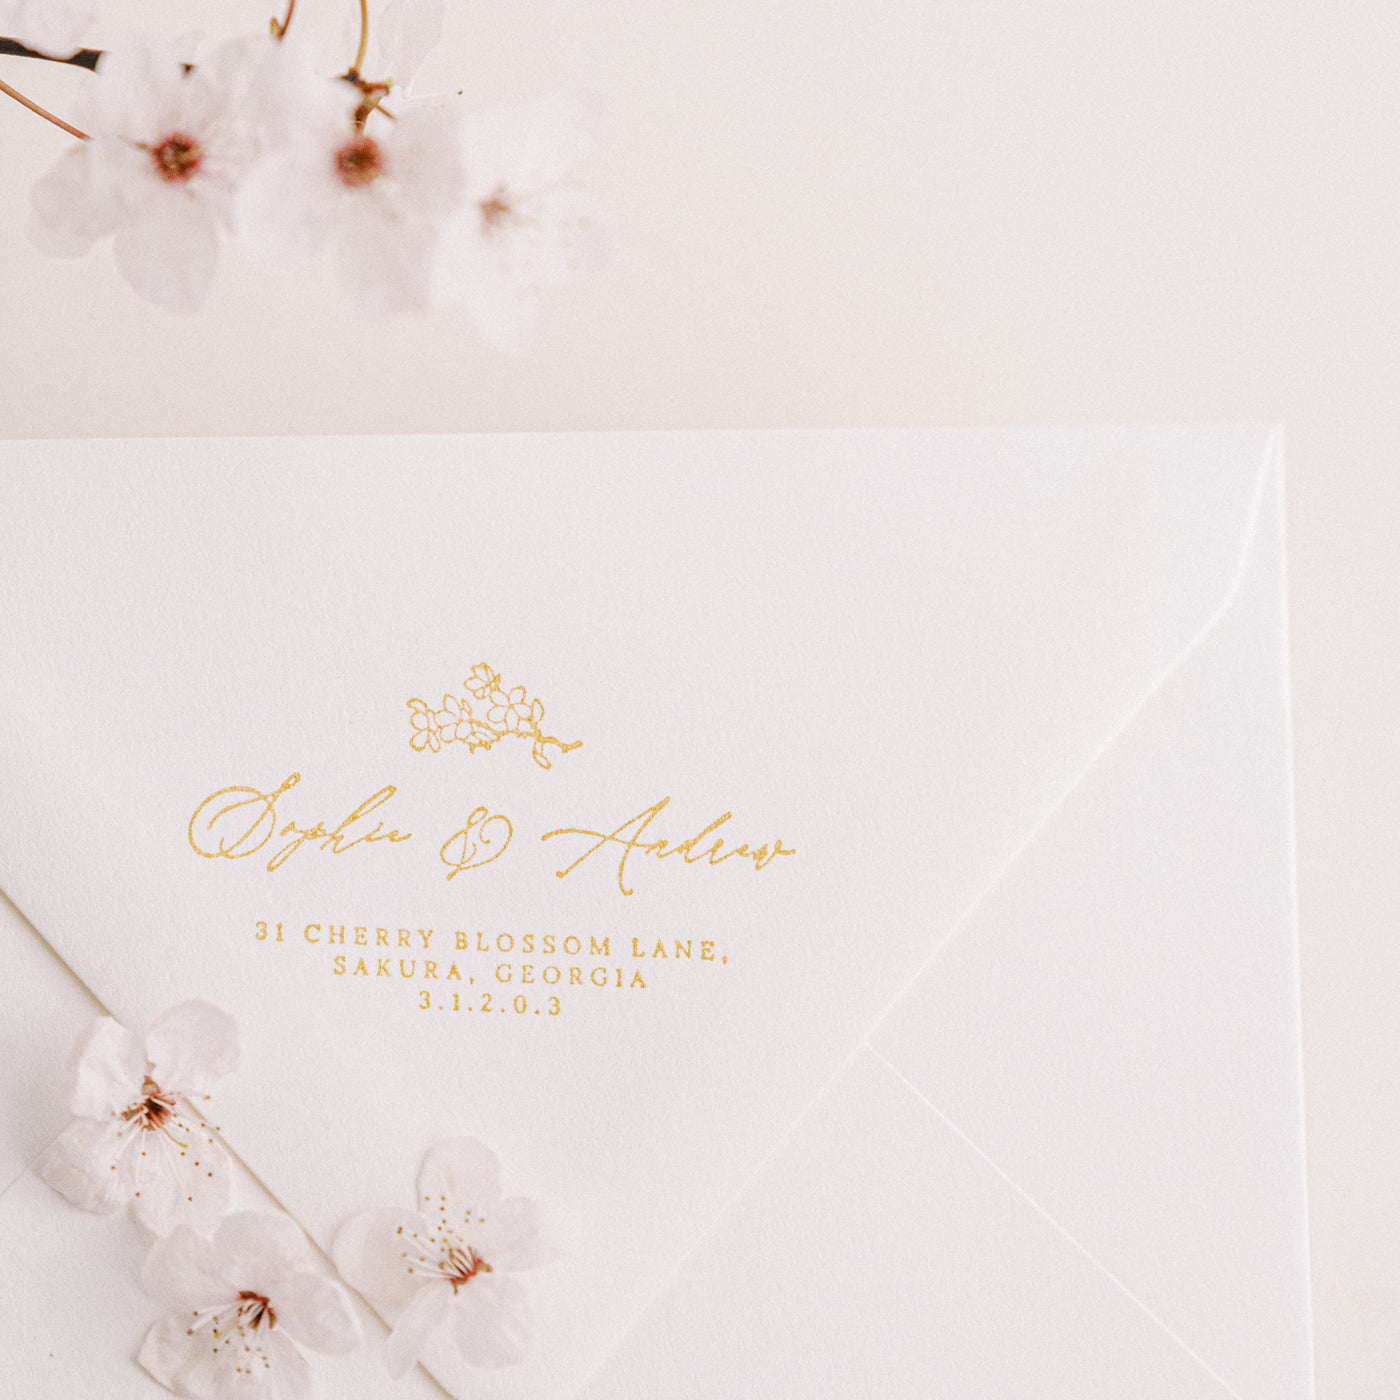 Misaki Cherry Blossom Return Address Rubber Stamp for Fine Art Wedding Invitations | 'Sakura' Cherry Blossom Embellishments for Blush Pink Spring Wedding | Heirloom Seals